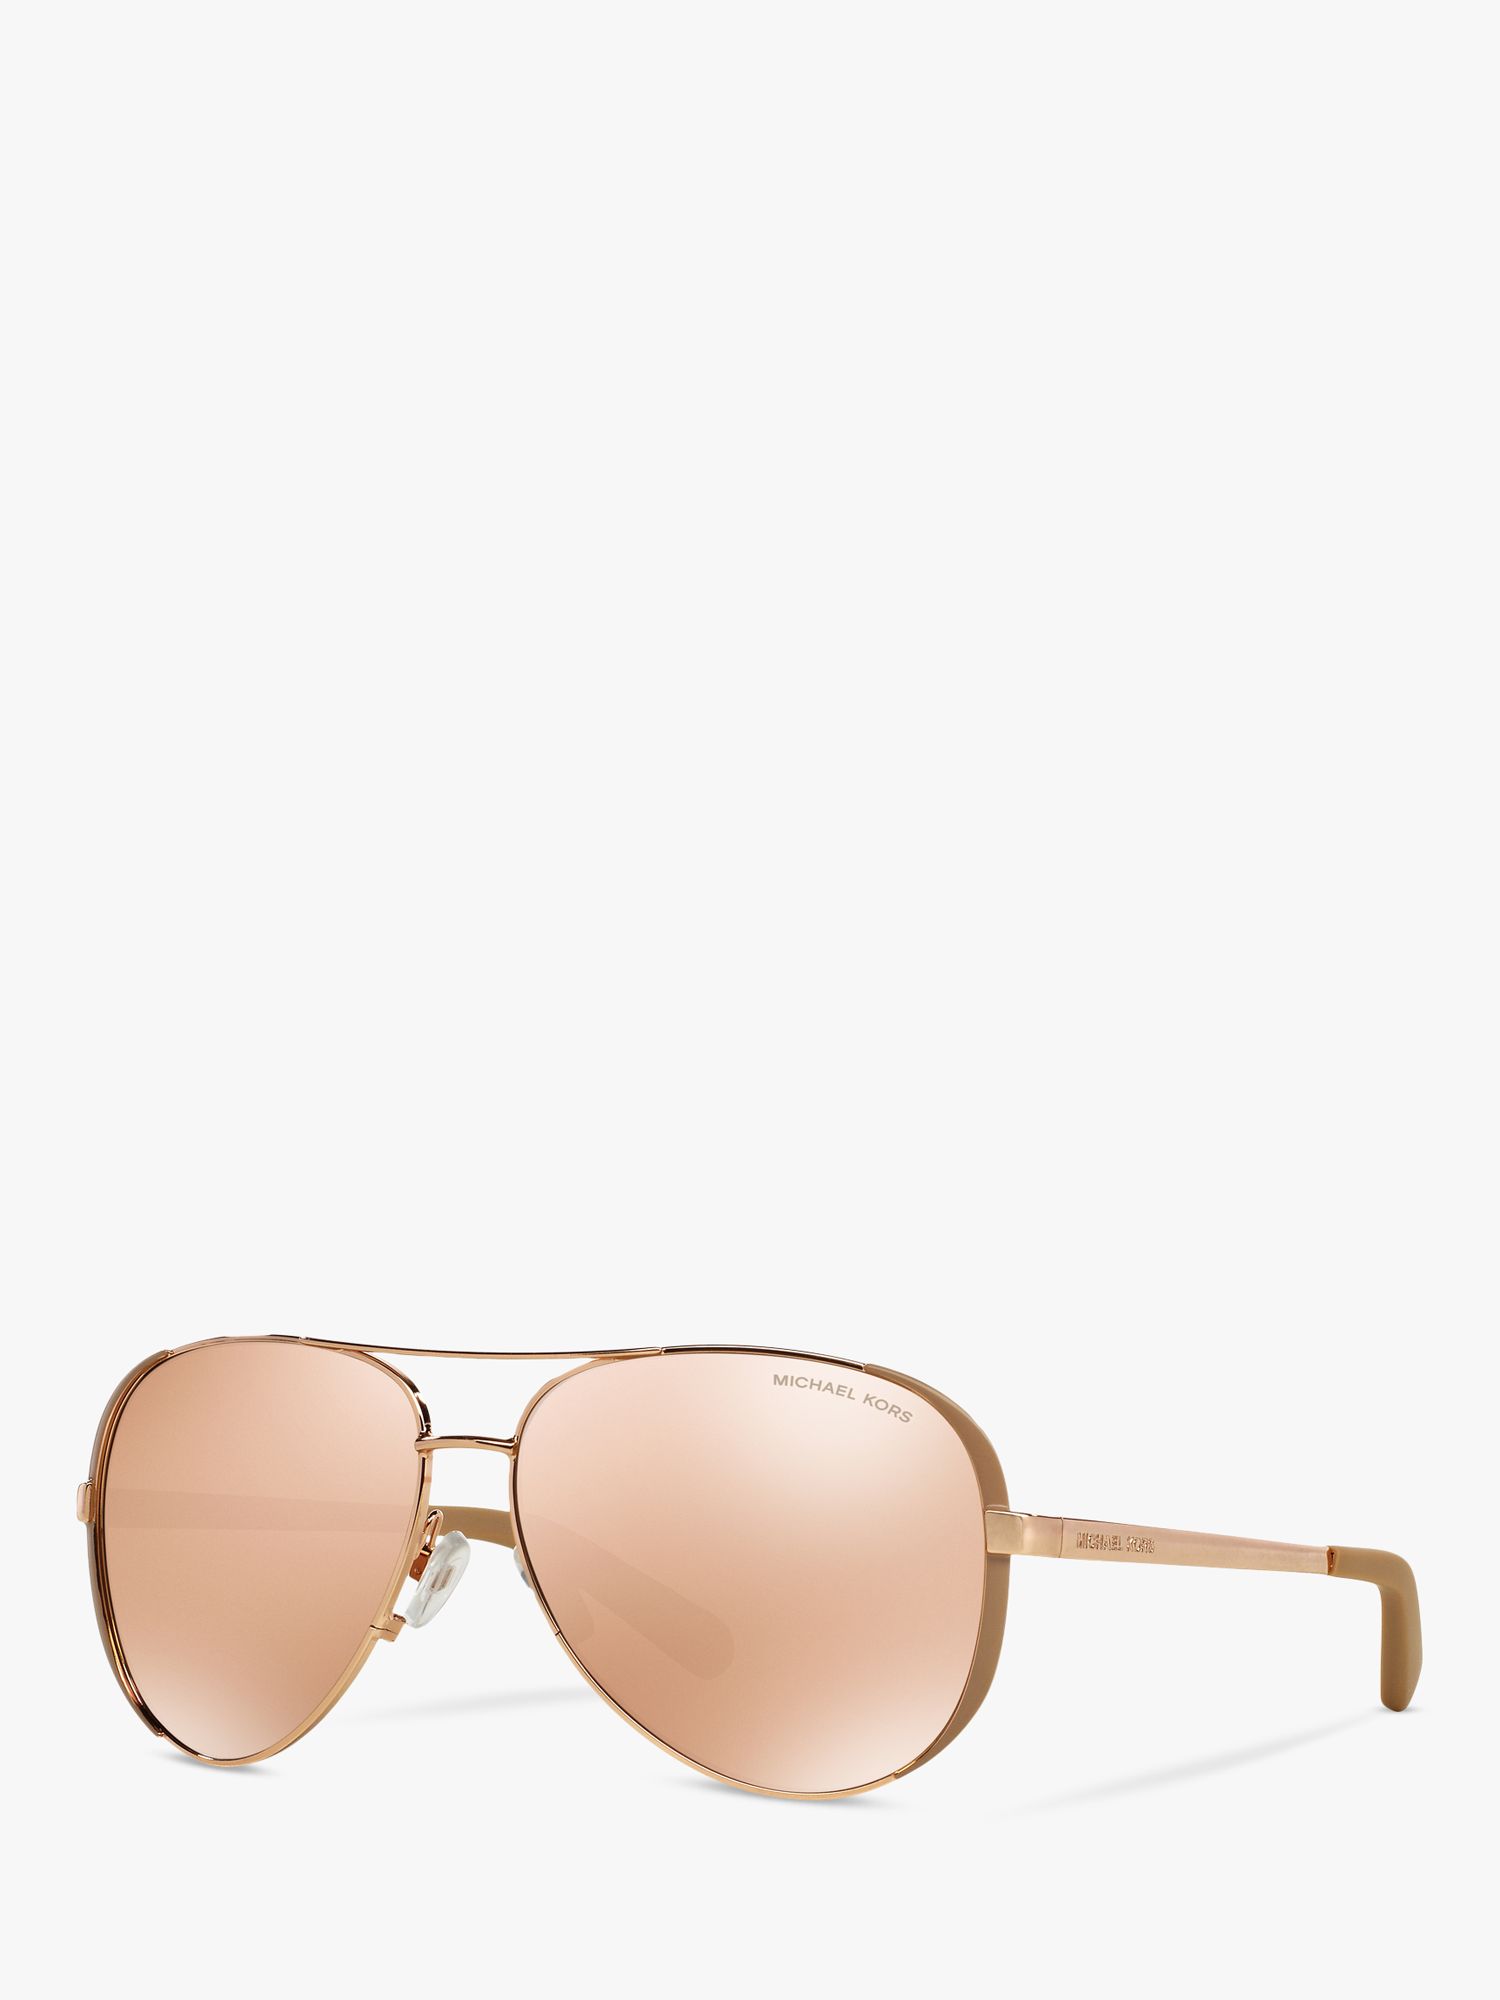 Michael Kors MK5004 Women's Chelsea Aviator Sunglasses, Gold/Mirror Pink at  John Lewis & Partners